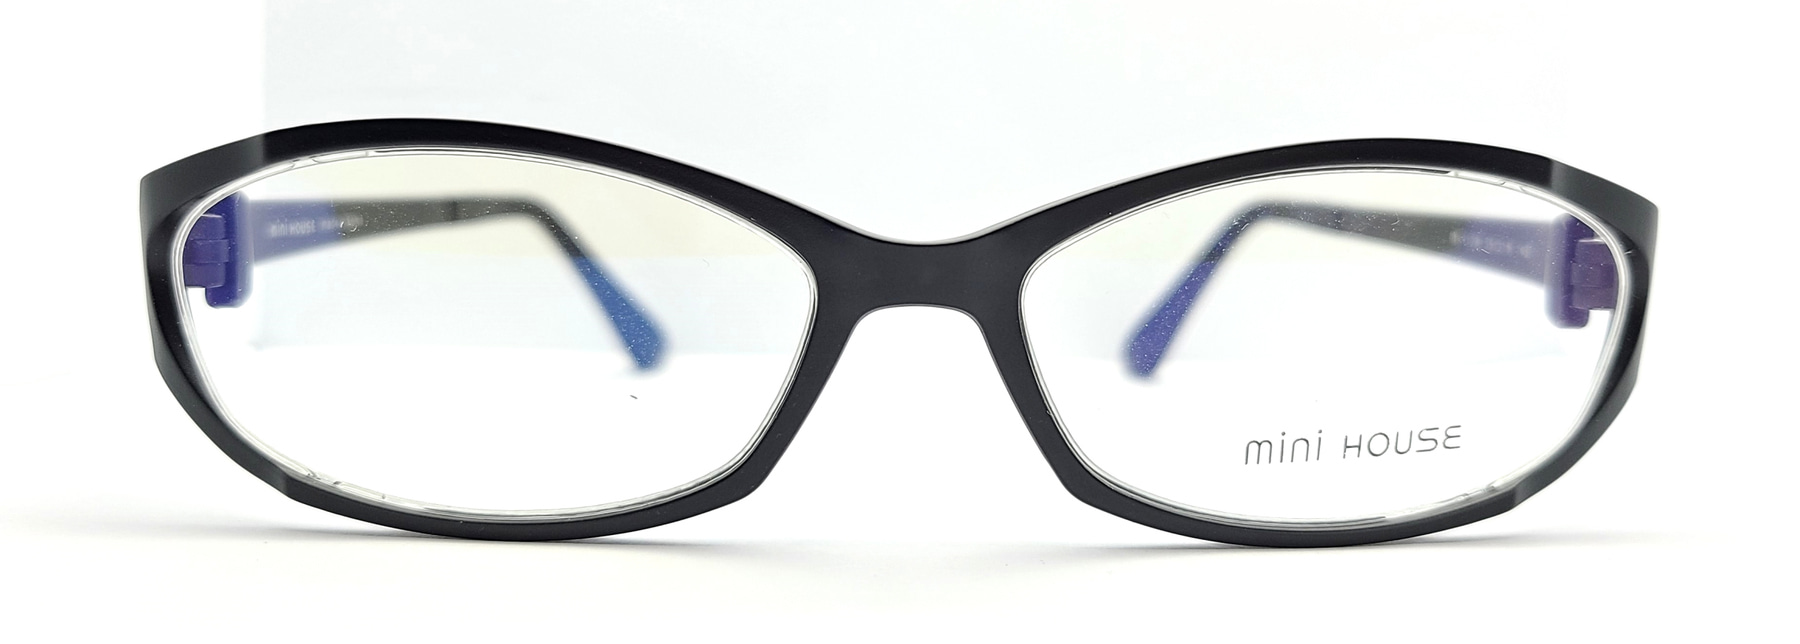 MINIHOUSE M-1109, Korean glasses, sunglasses, eyeglasses, glasses